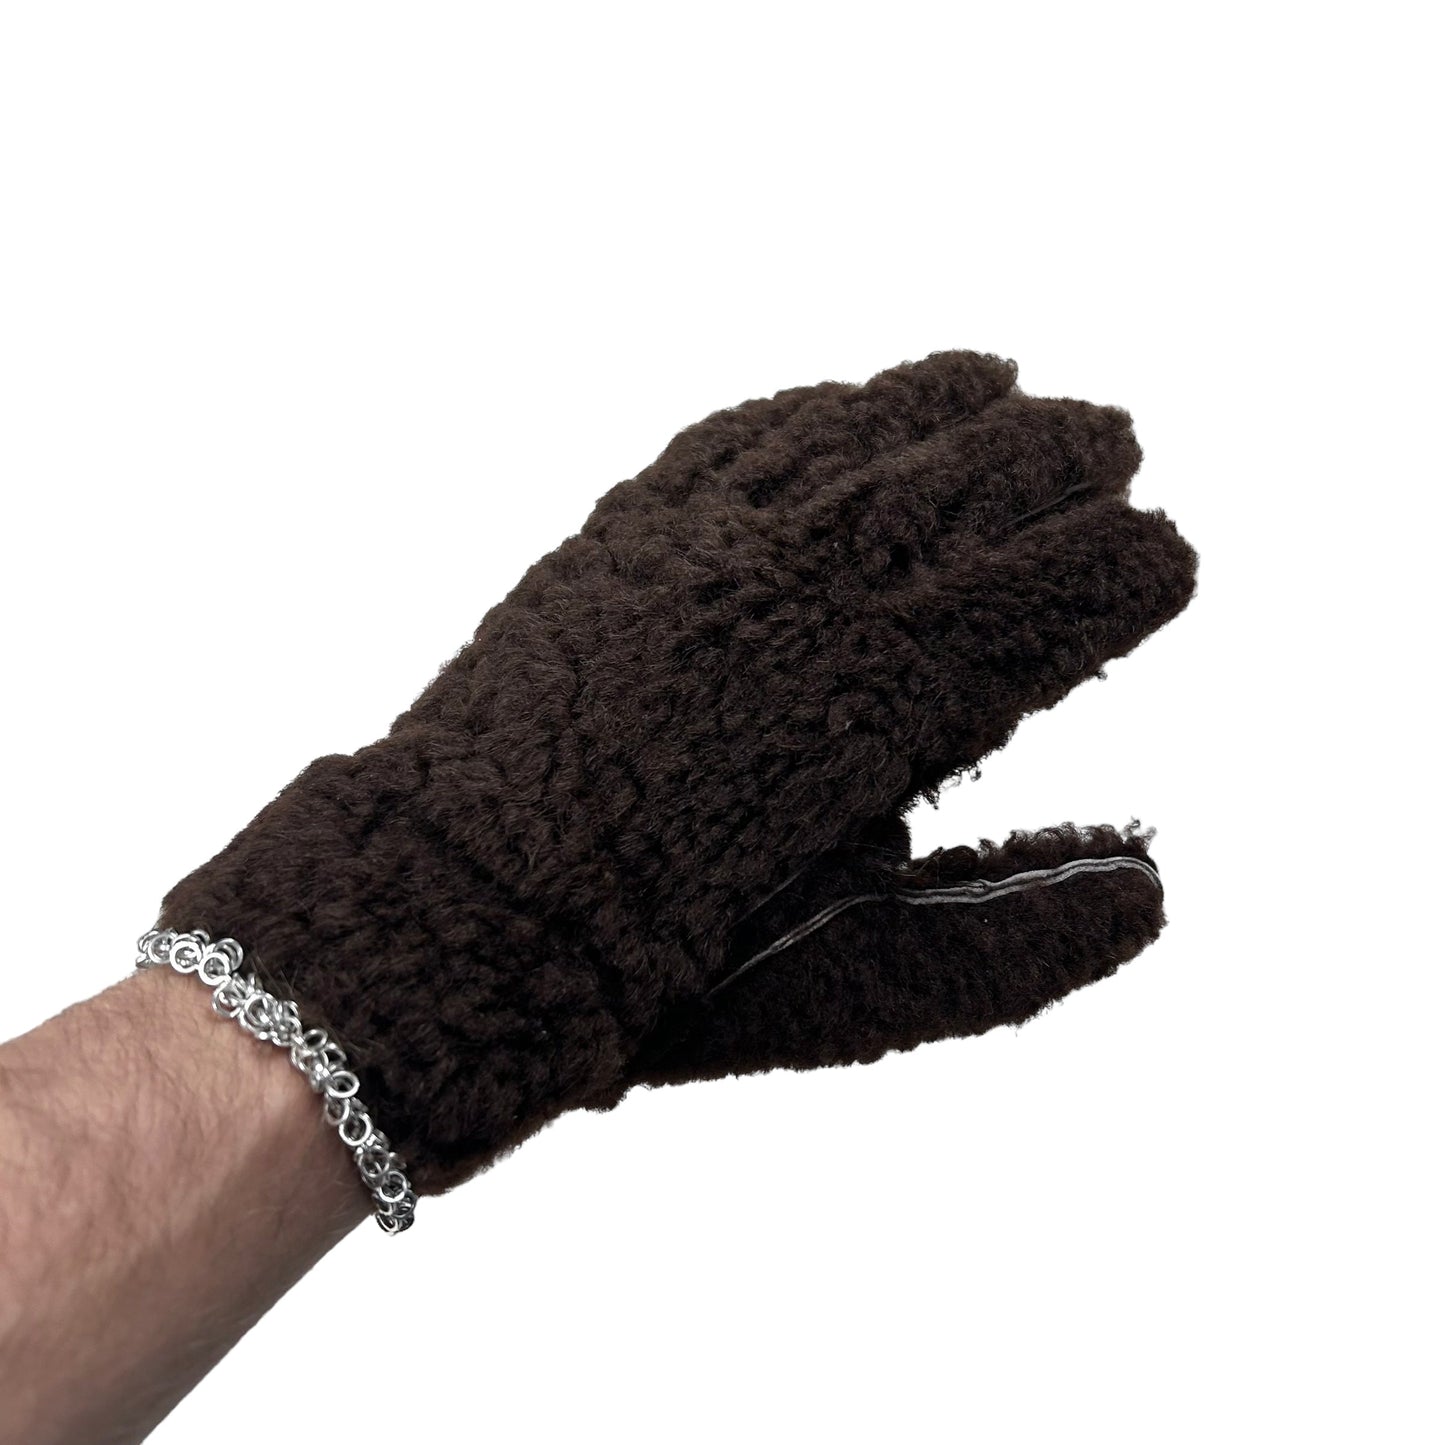 Maison Martin Margiela Lamb Fur Gloves - AW12